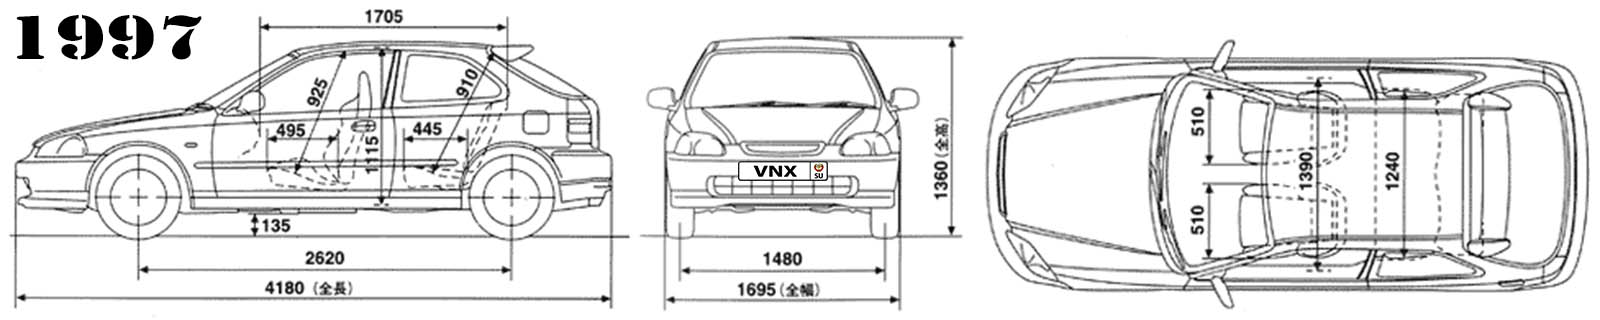 Габаритные размеры Хонда Сивик 1997 (dimensions Honda Civic type R)